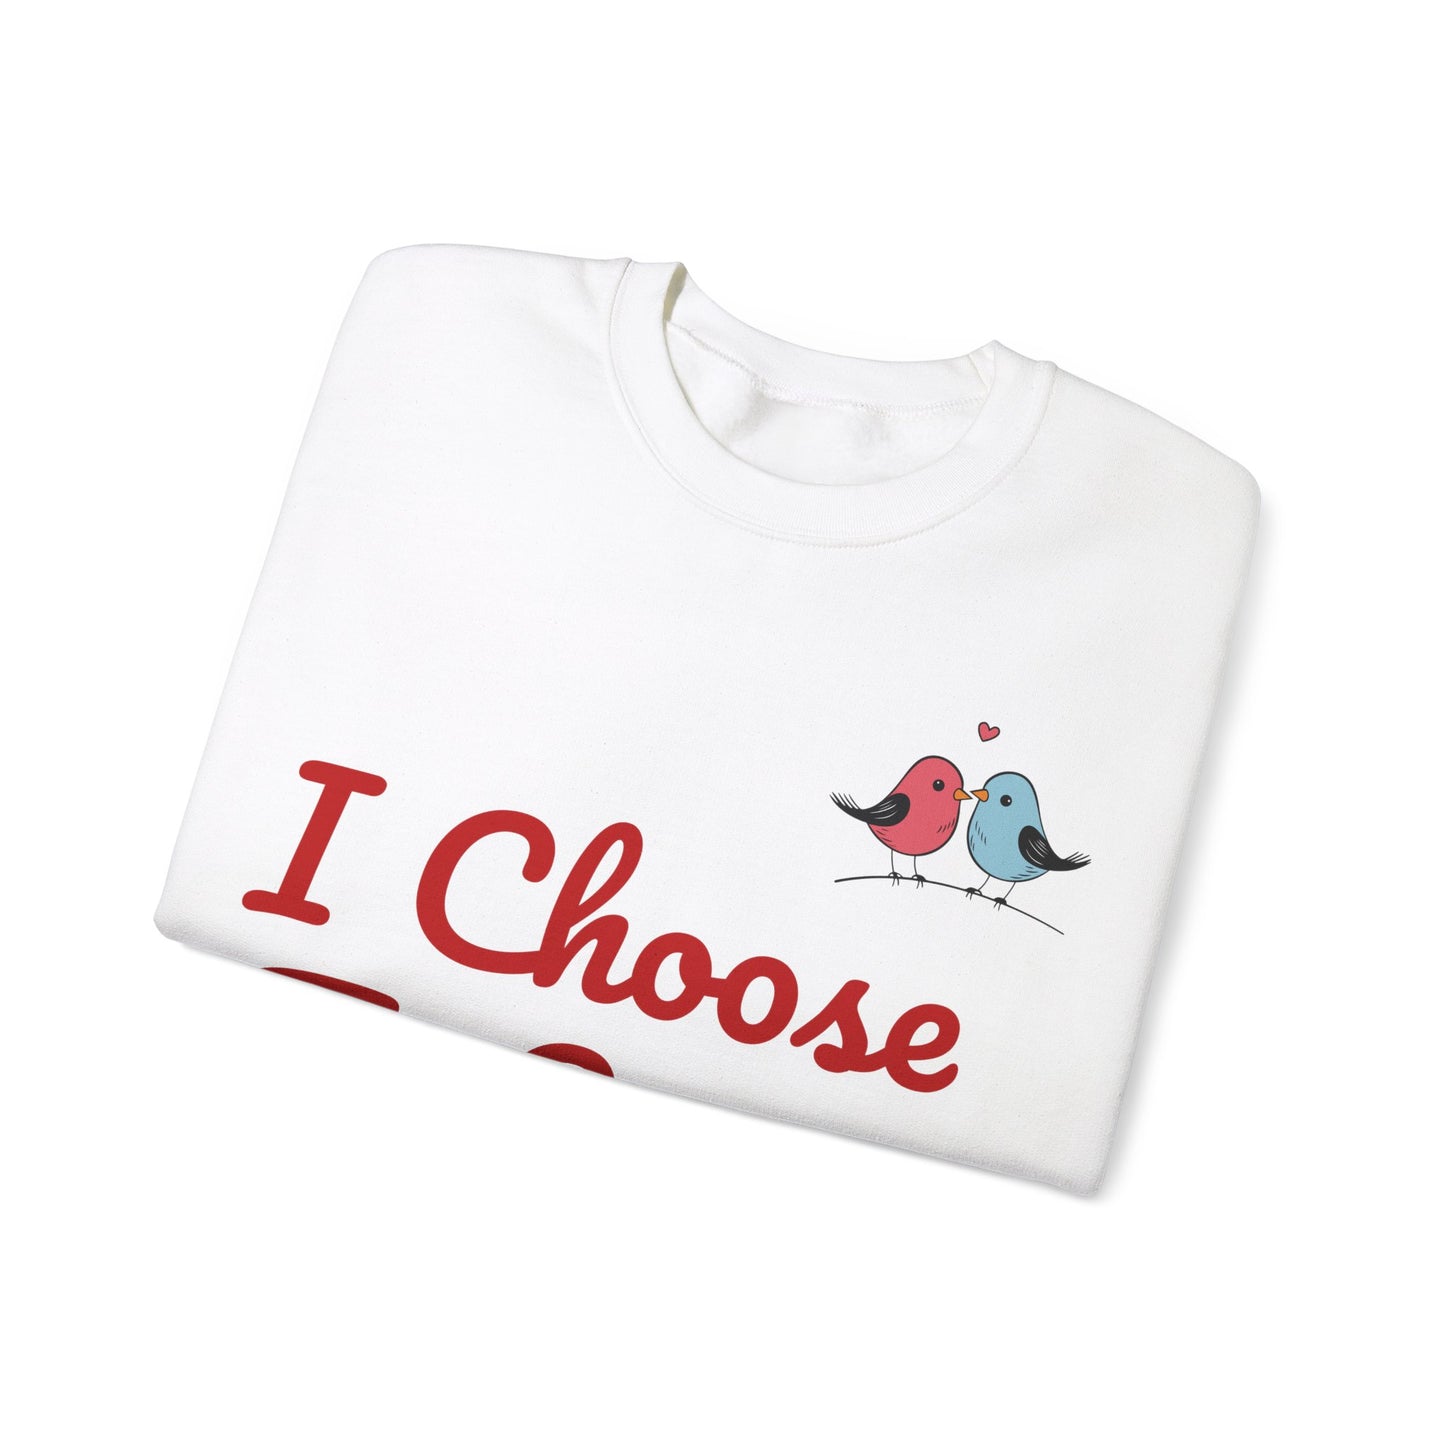 Lovebird Unisex Heavy Blend™ Crewneck Sweatshirt, (I Choose To Love You}, Men and Women Sweatshirt -Red Font